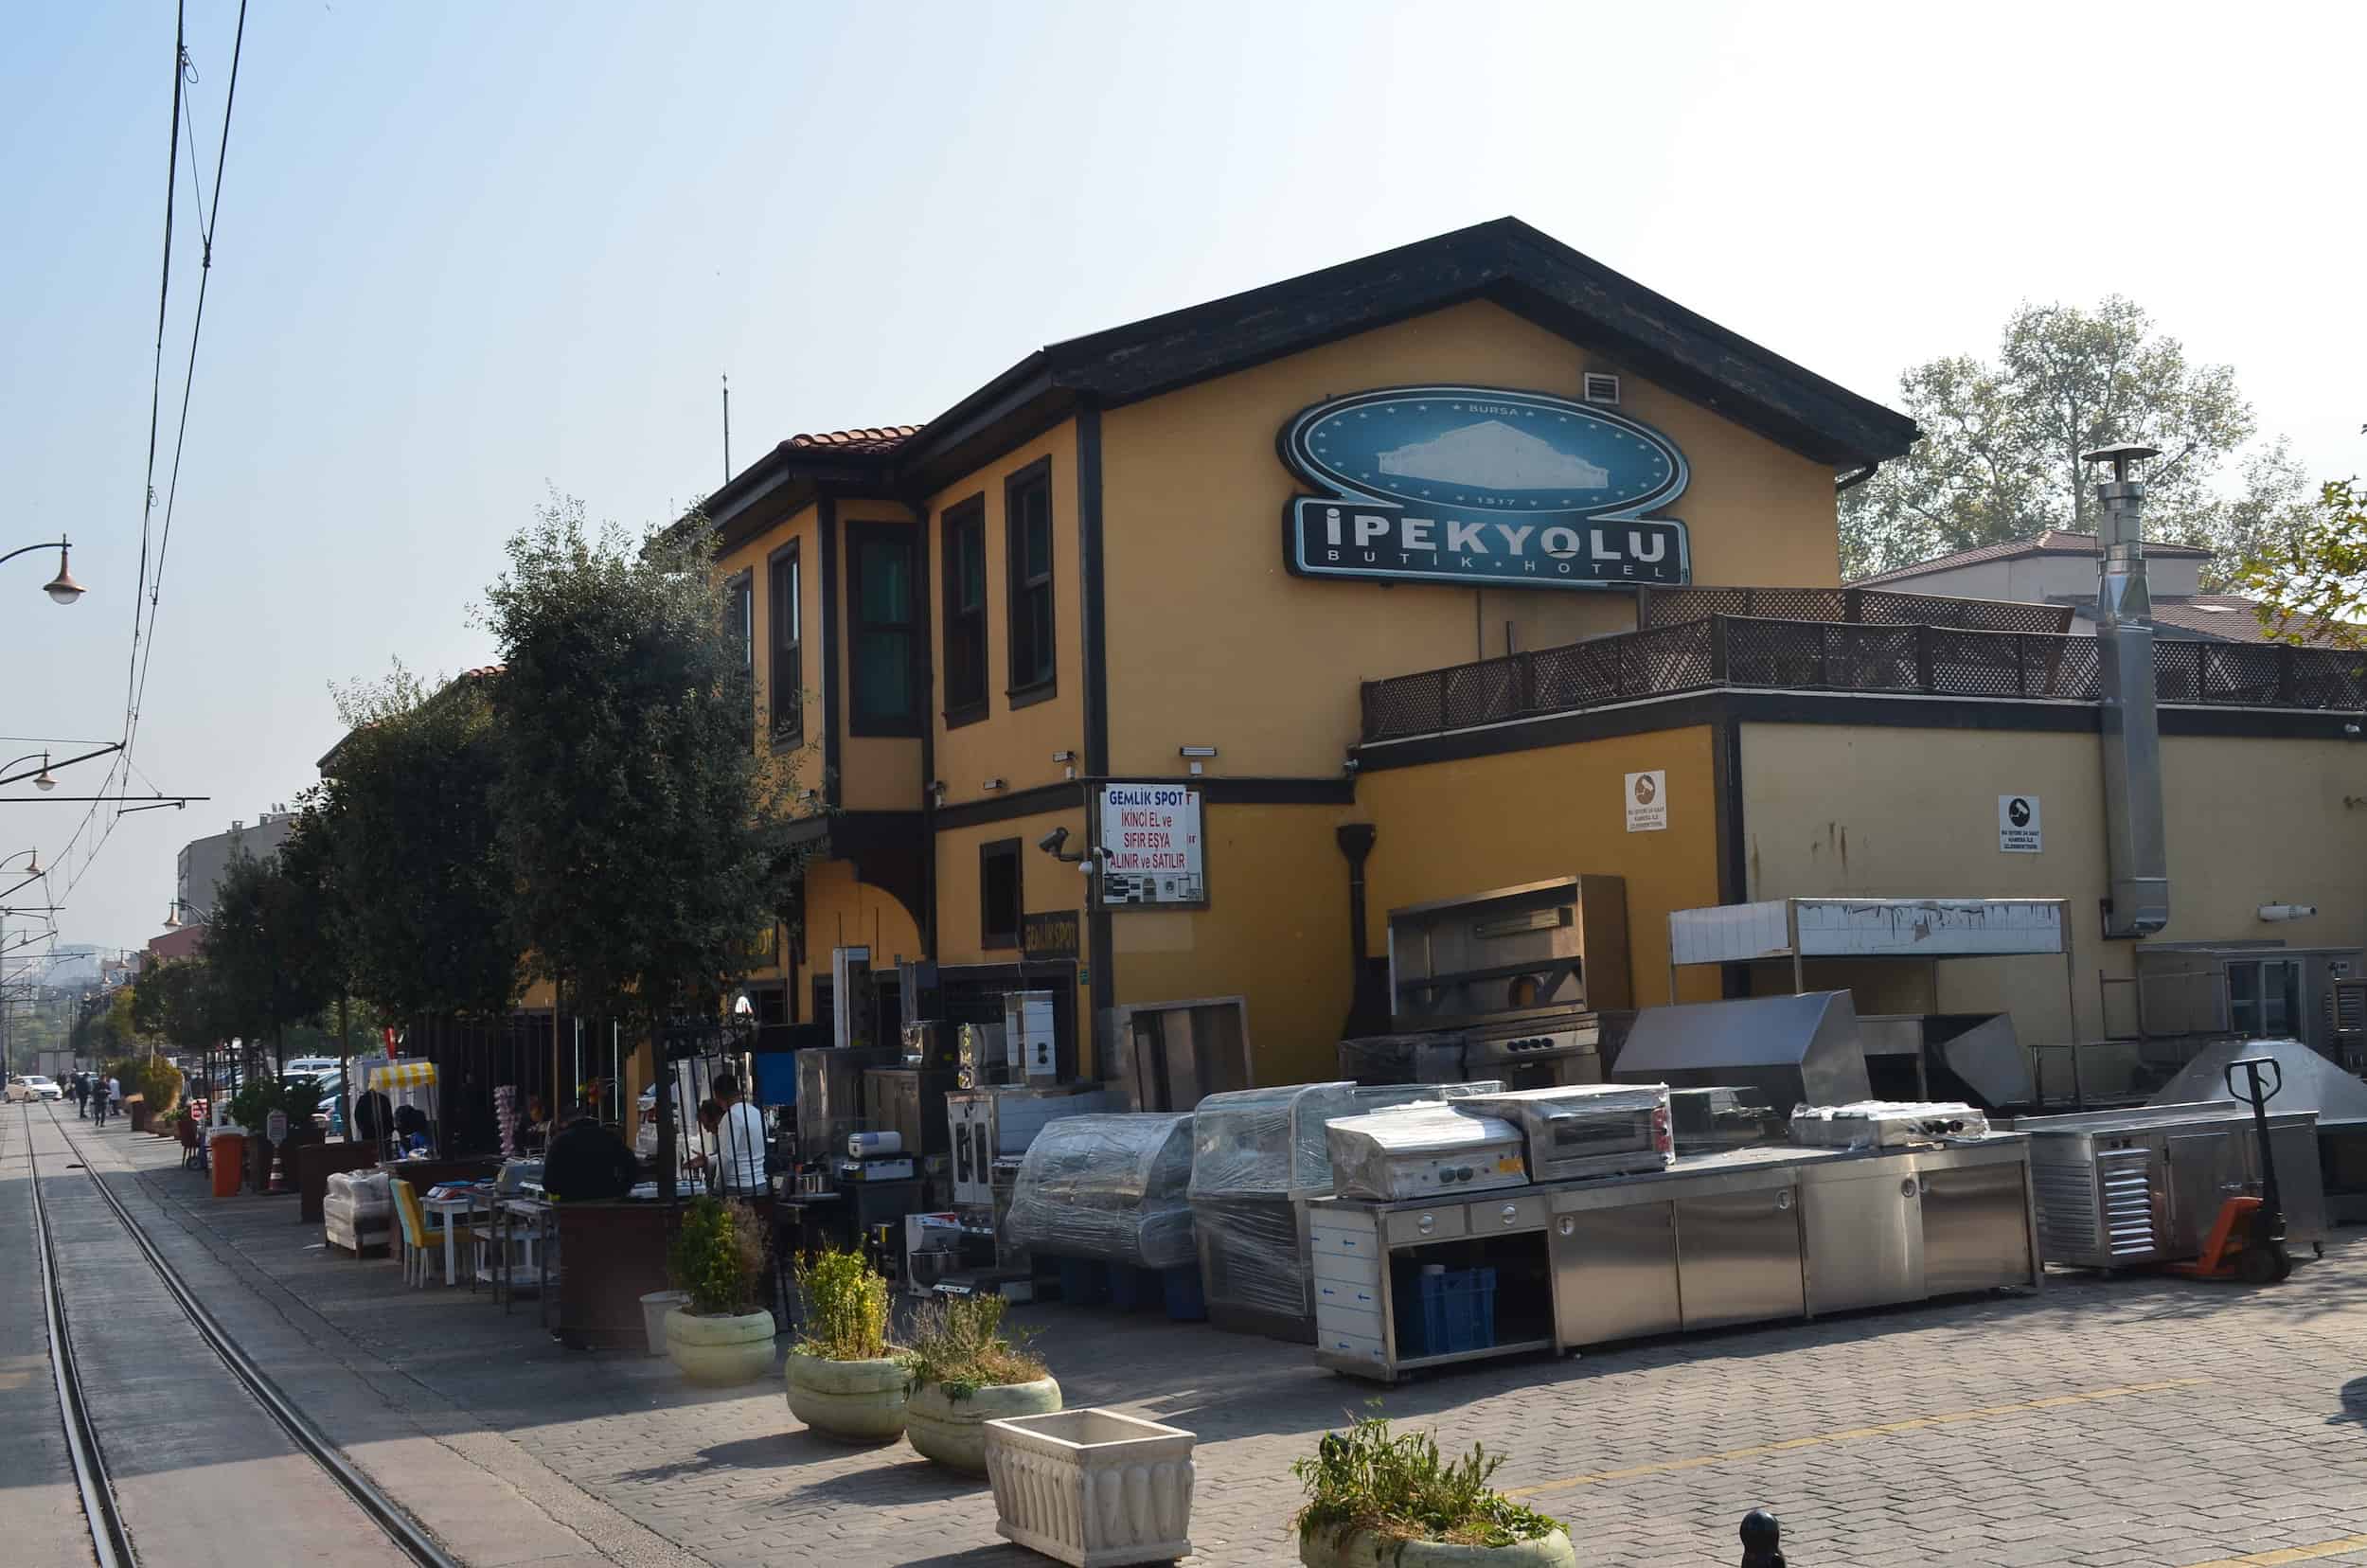 Ipekyolu Boutique Hotel in Bursa, Turkey